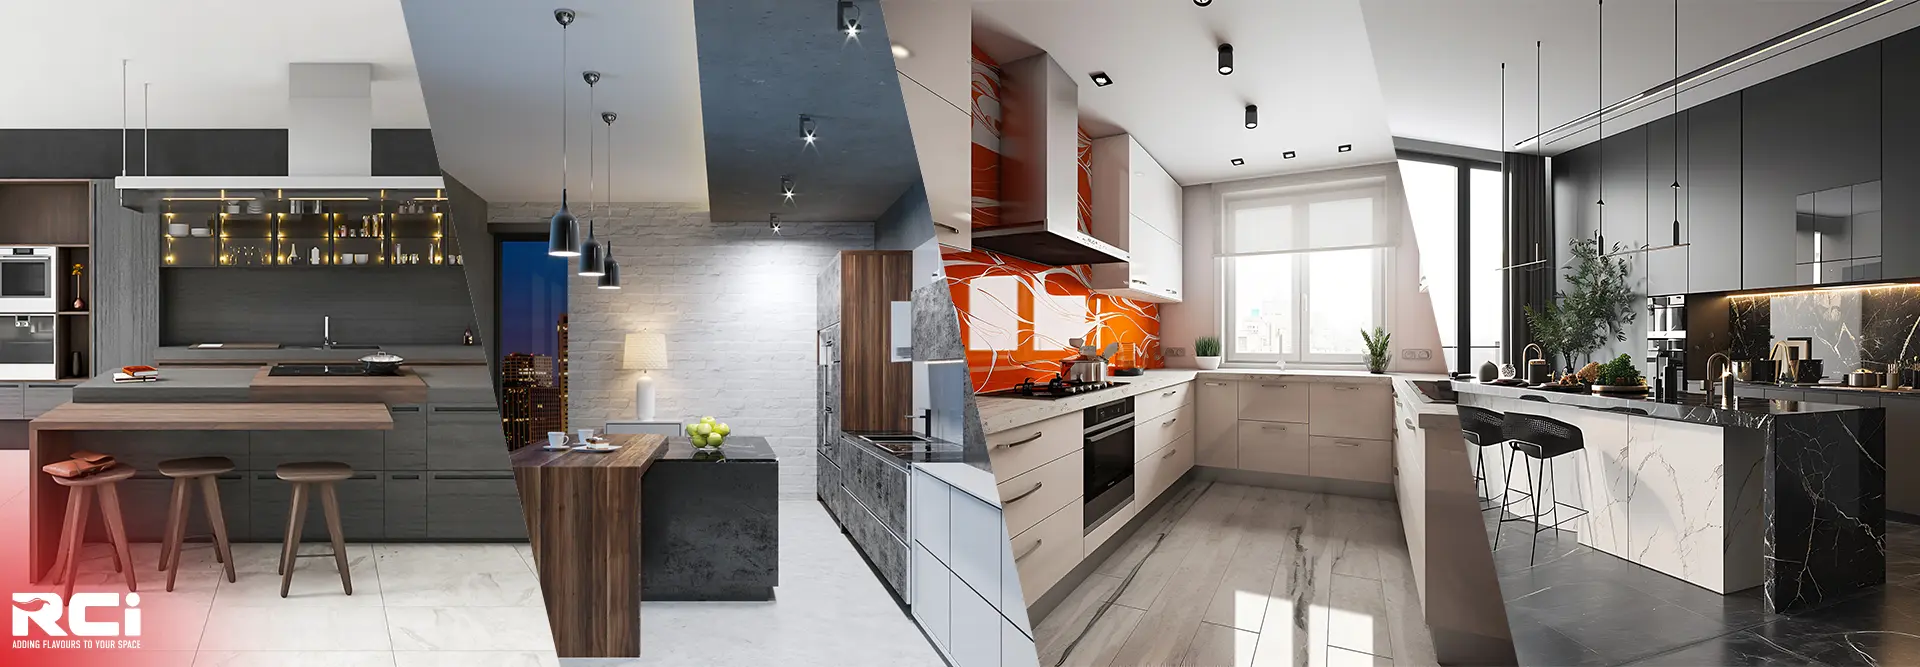 Expert kitchen interior design services featuring modern and stylish kitchen designs by RCi Red Chillies Interiors LLC in Dubai.